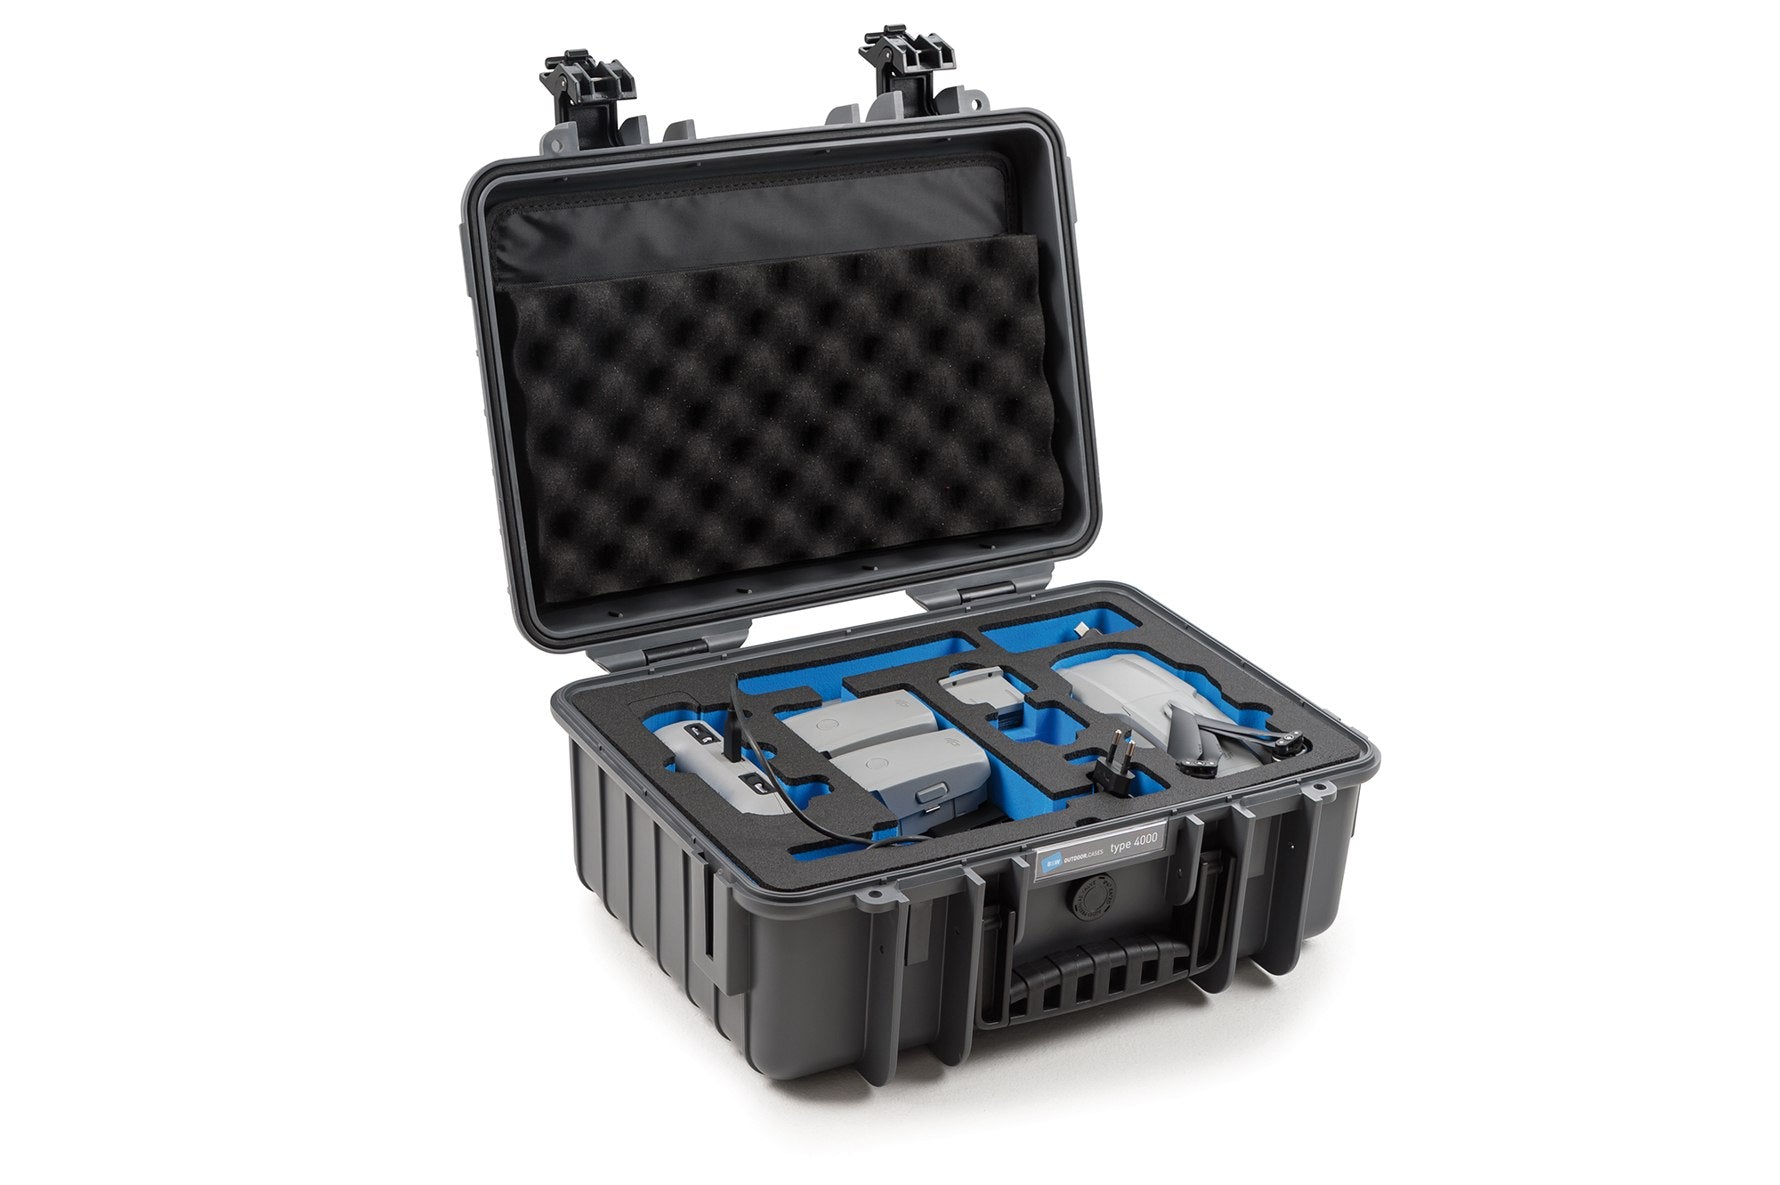 B&W koffer4000 sötétszürke DJI Mavic Air 2 + Smart Controller modellhez (DRON)-0